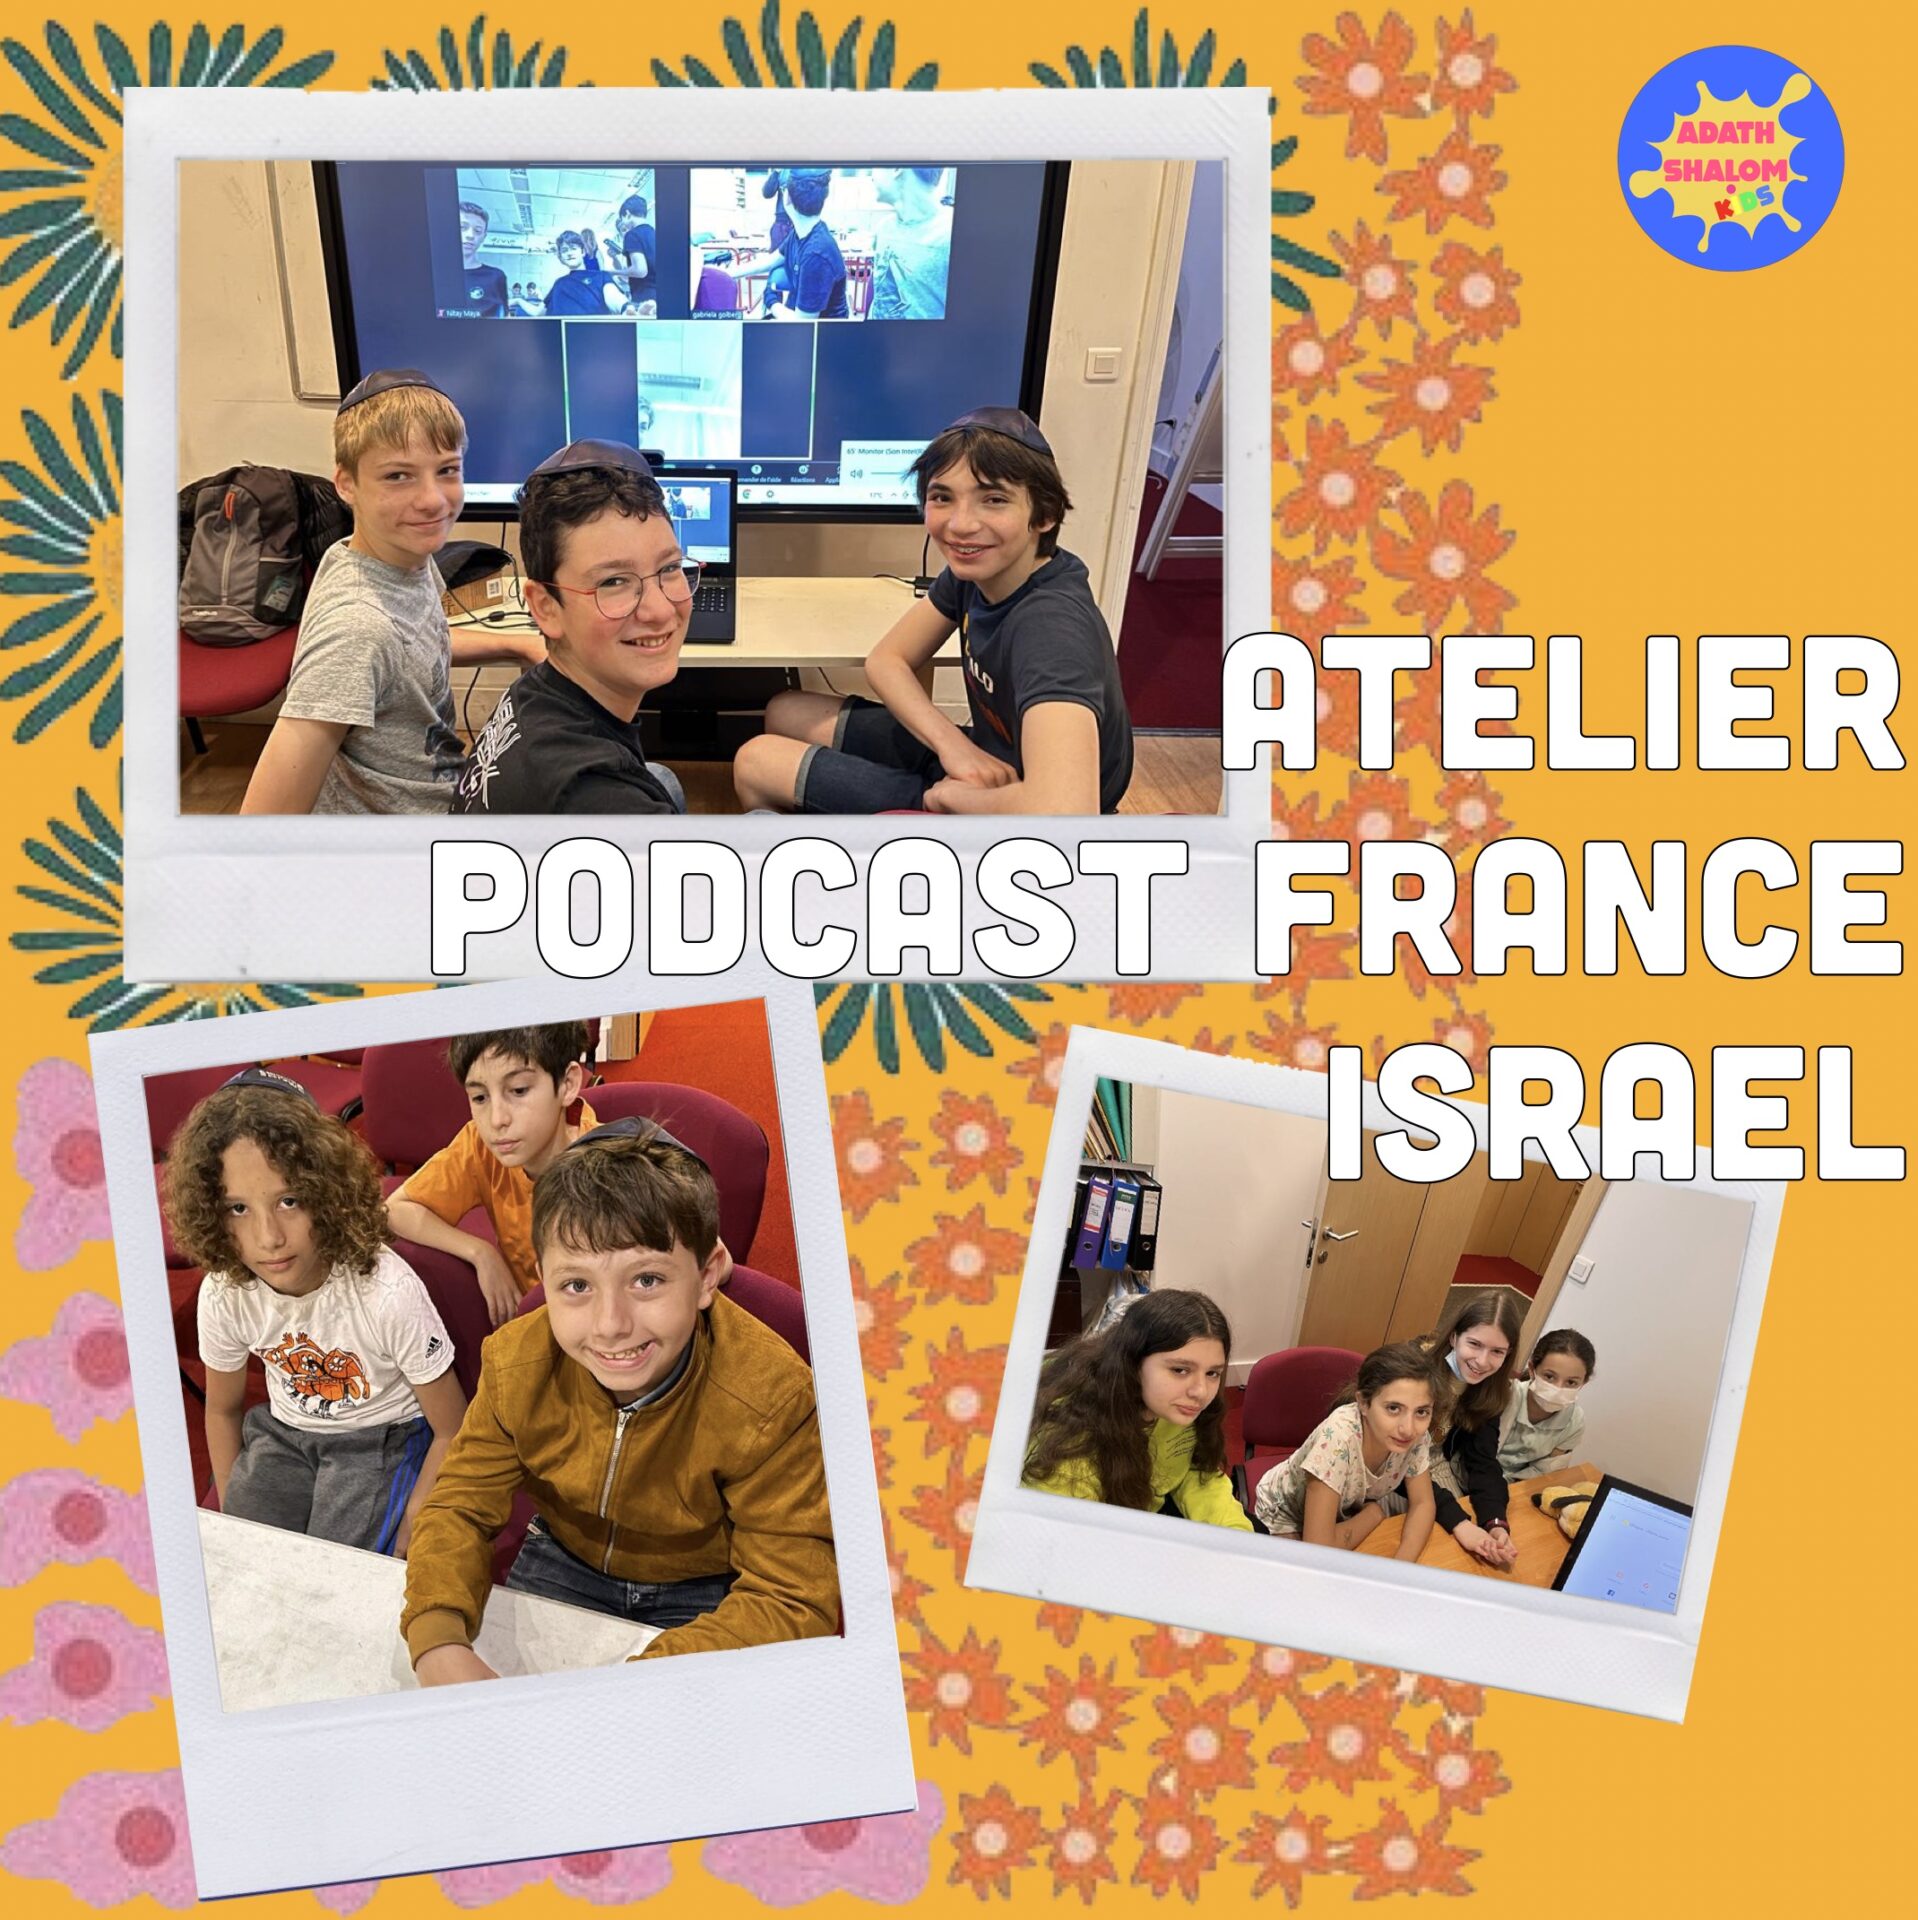 Talmud Torah Adath Shalom 2021 2022 Podcast France Israel